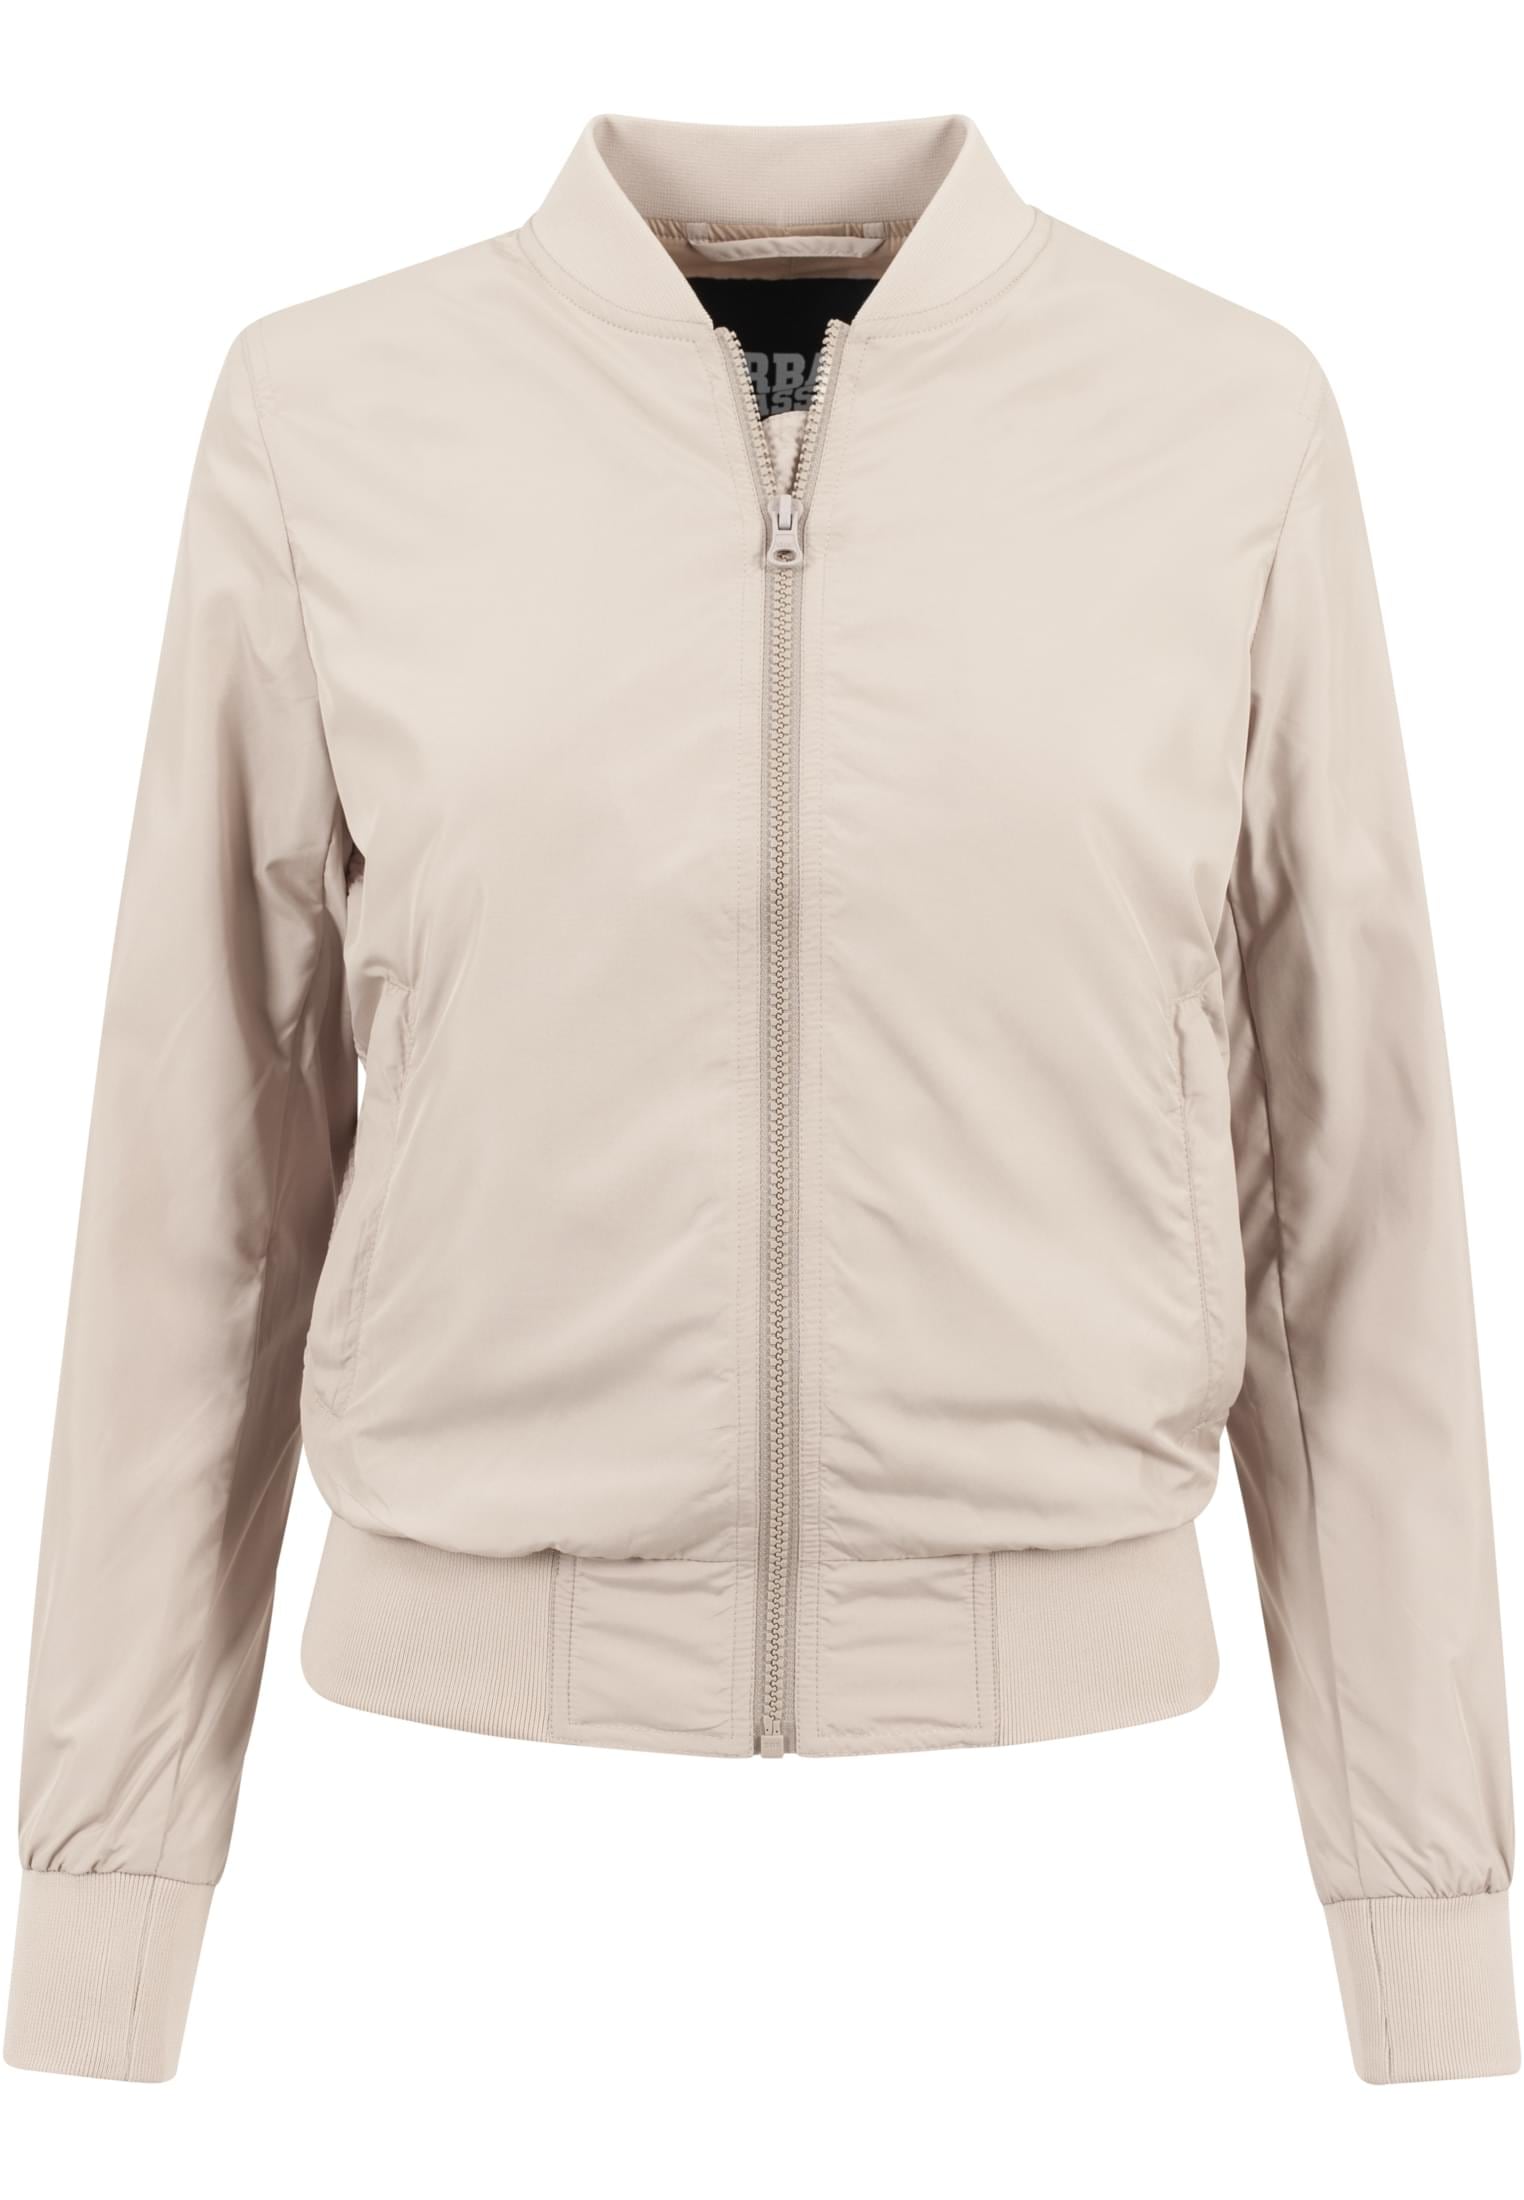 URBAN CLASSICS Outdoorjacke »Damen Jacket«, (1 Light Bomber St.) Ladies kaufen